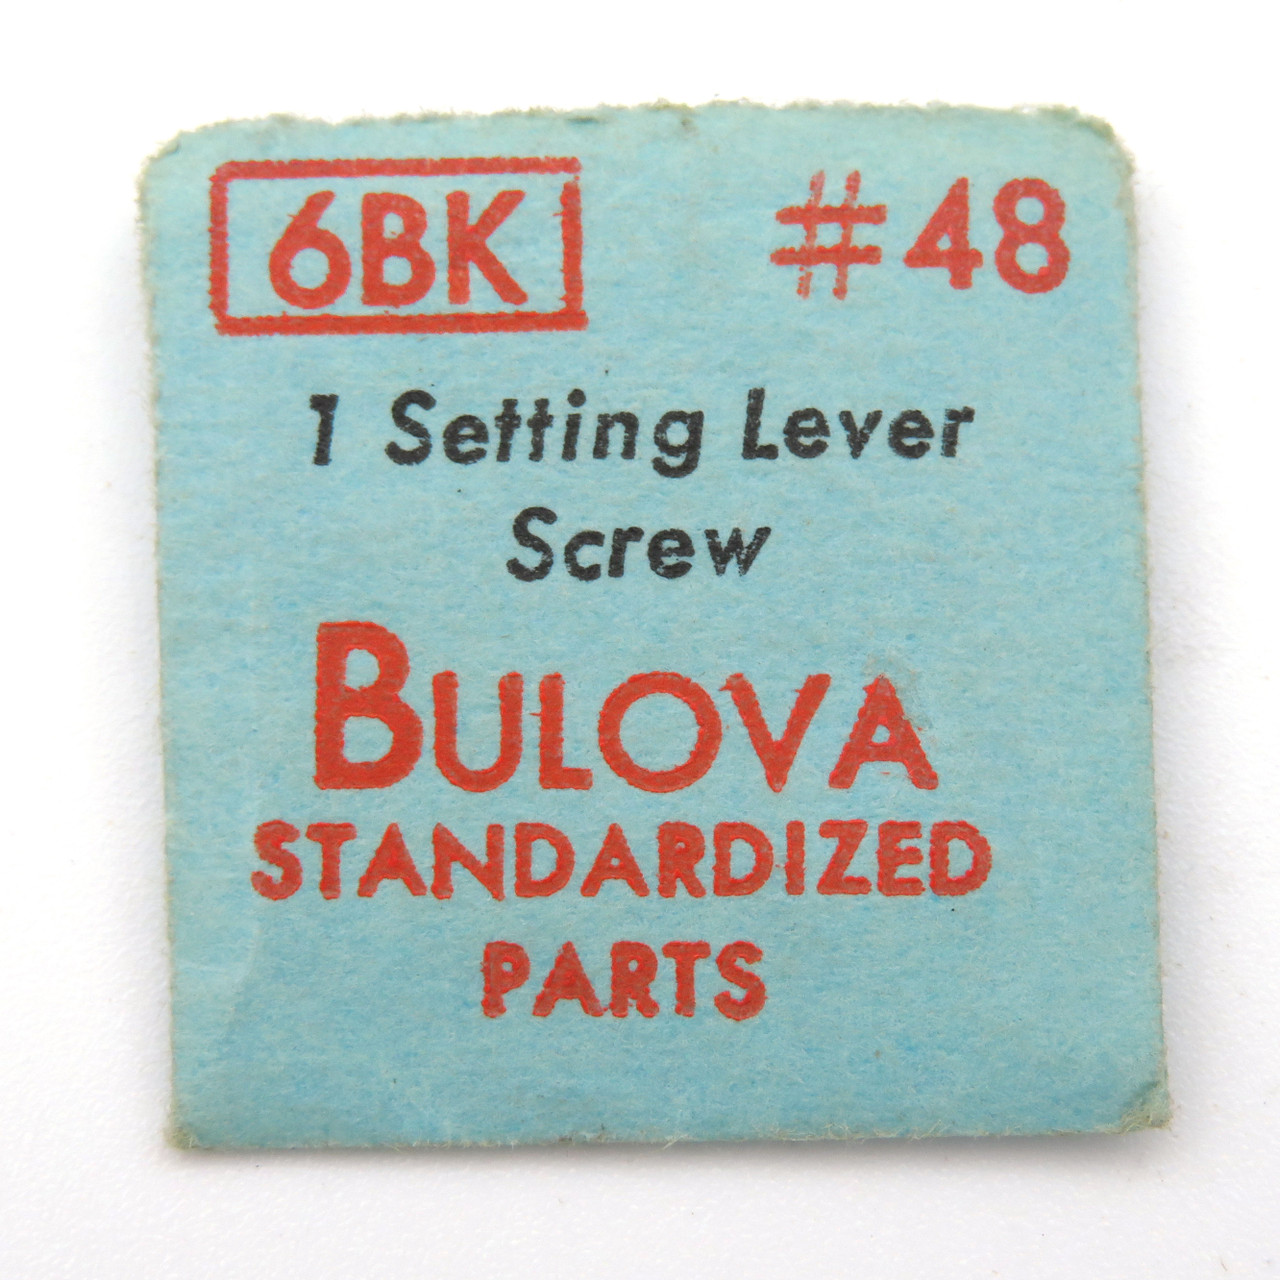 Bulova 6BK Setting Lever Screw Part # 48